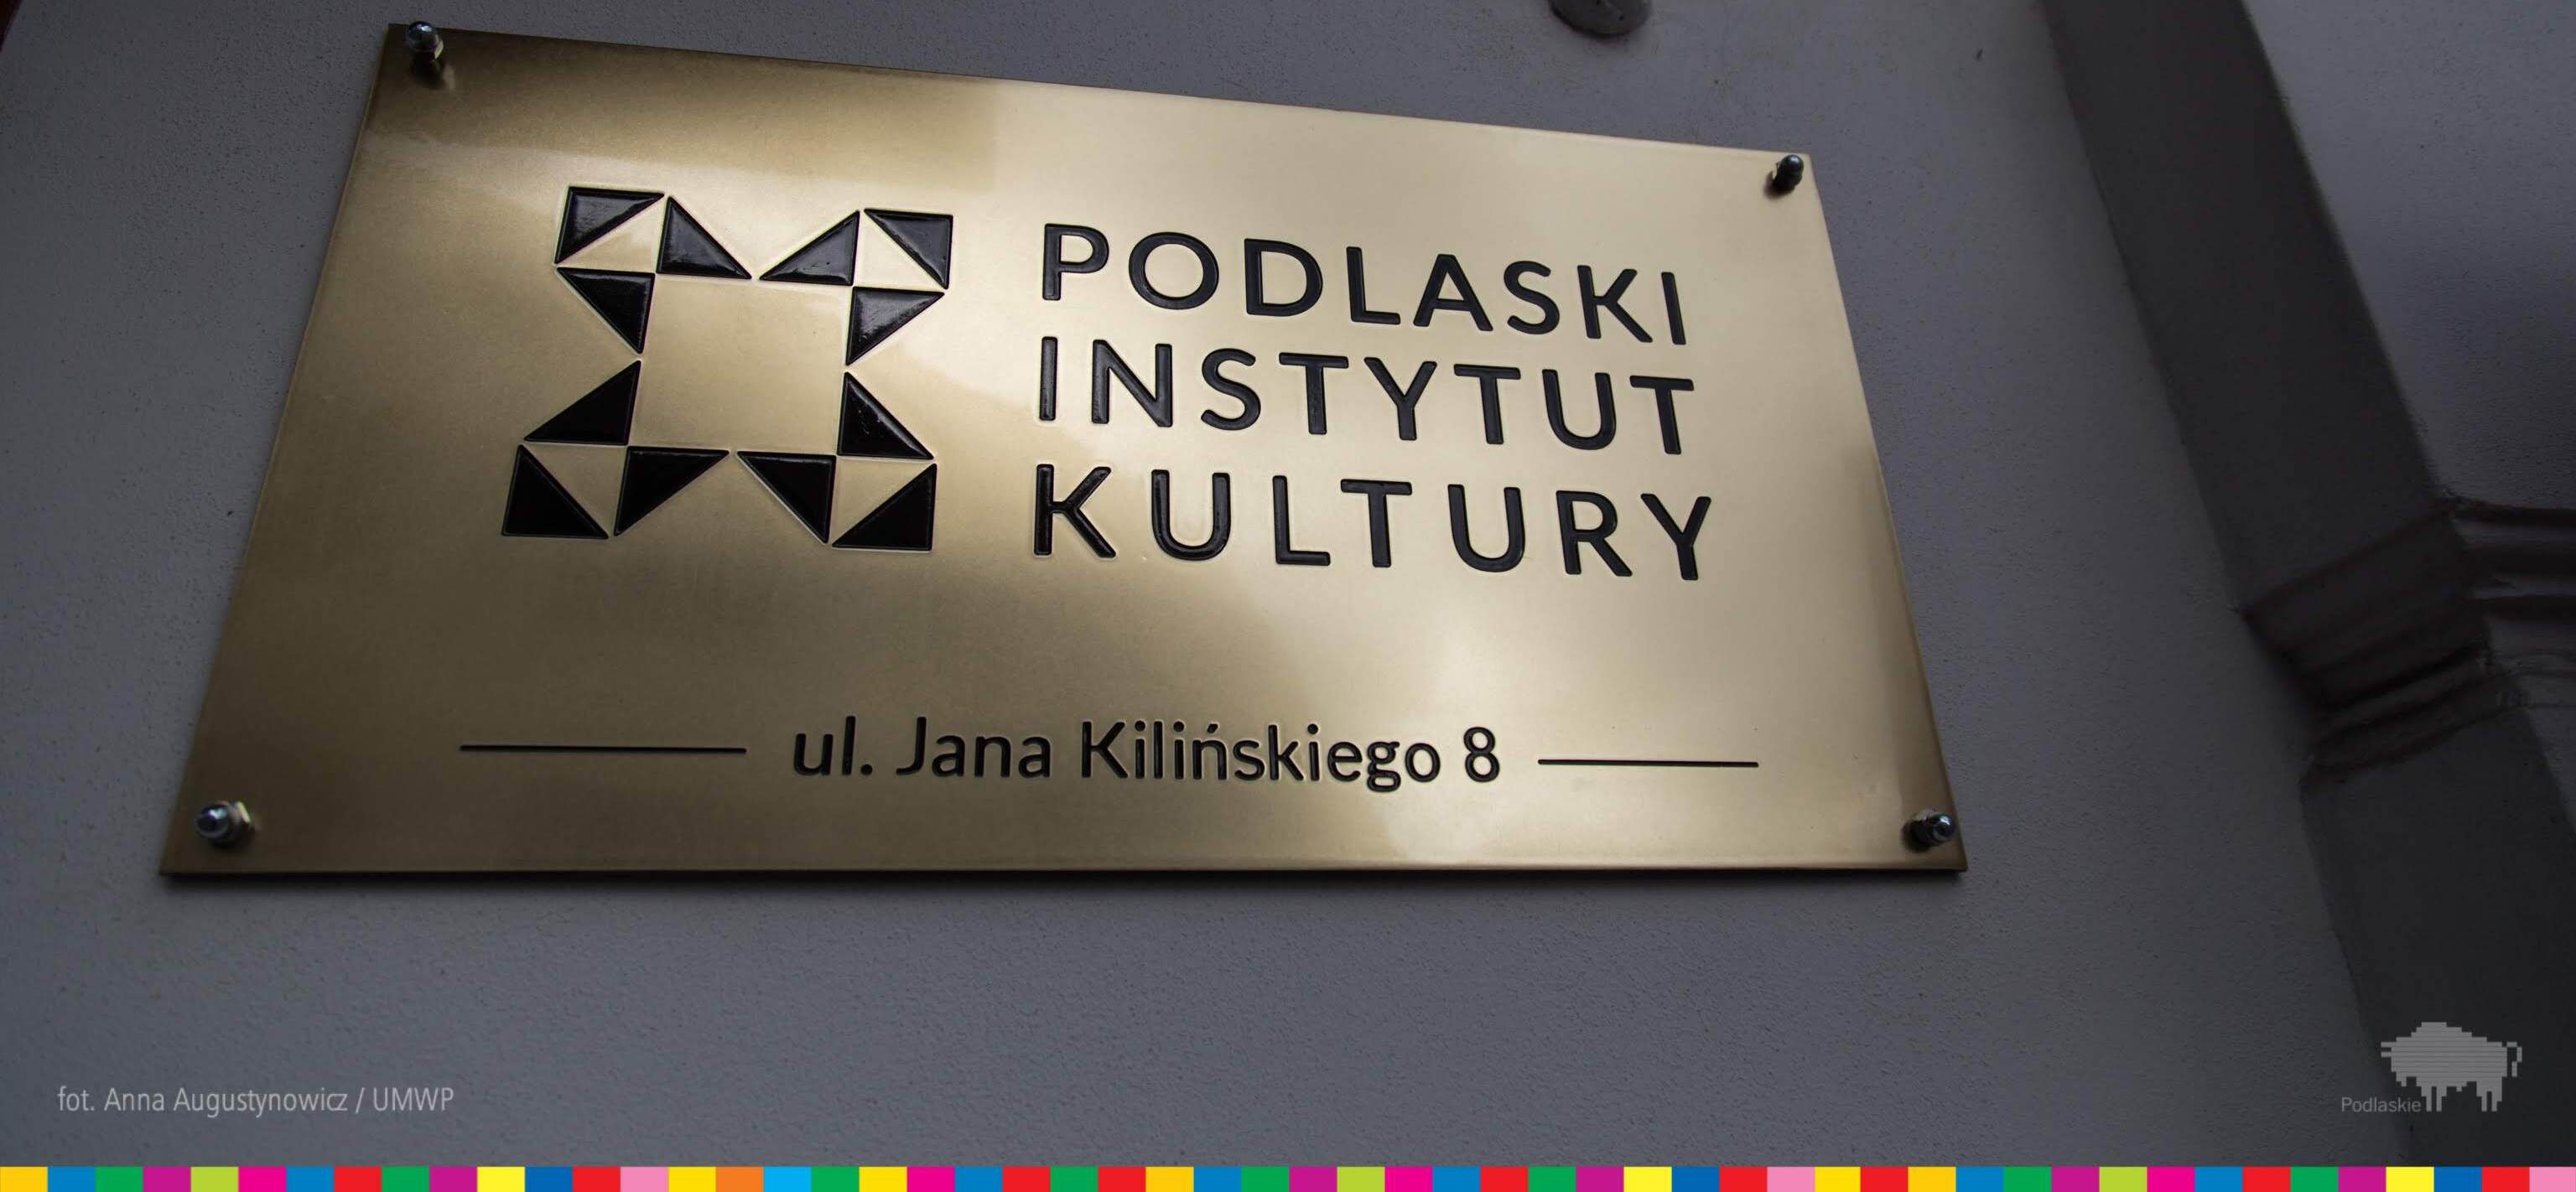 Tablica z logo Podlaskiego Instytutu Kultury.